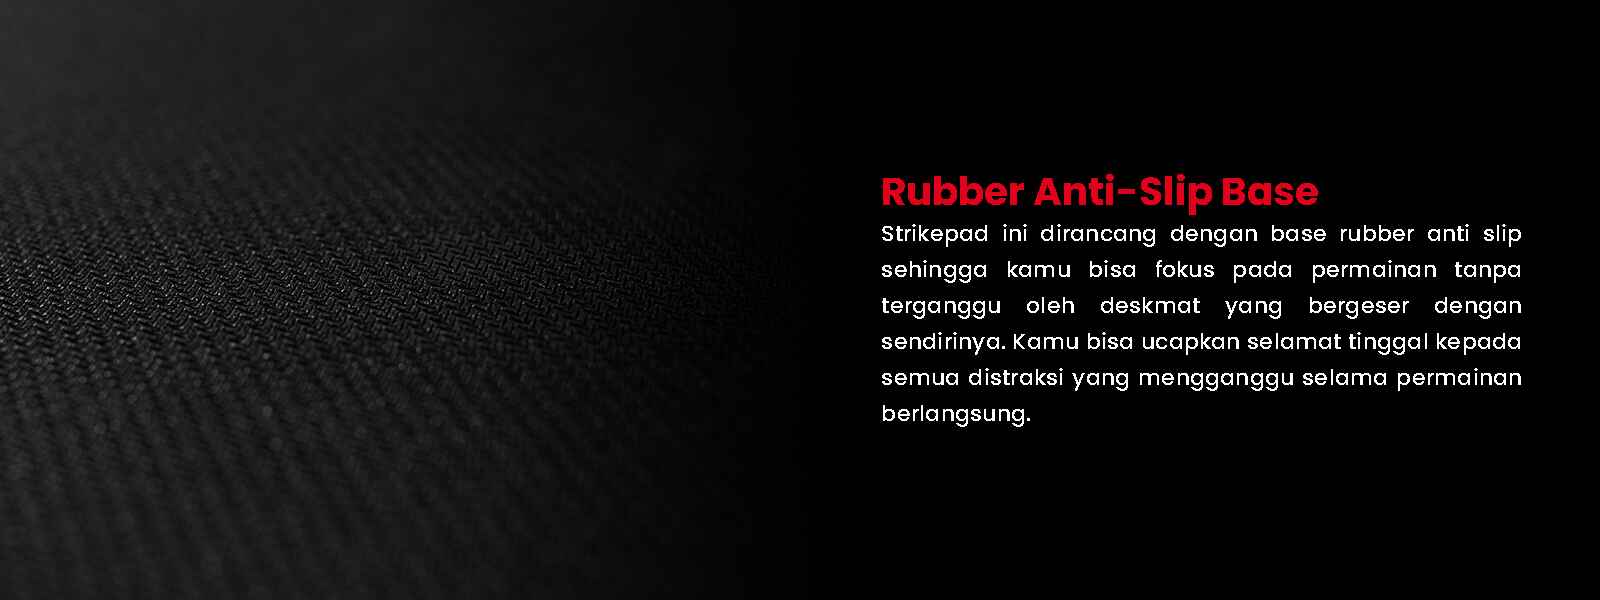 Rubber Anti-Slip Base